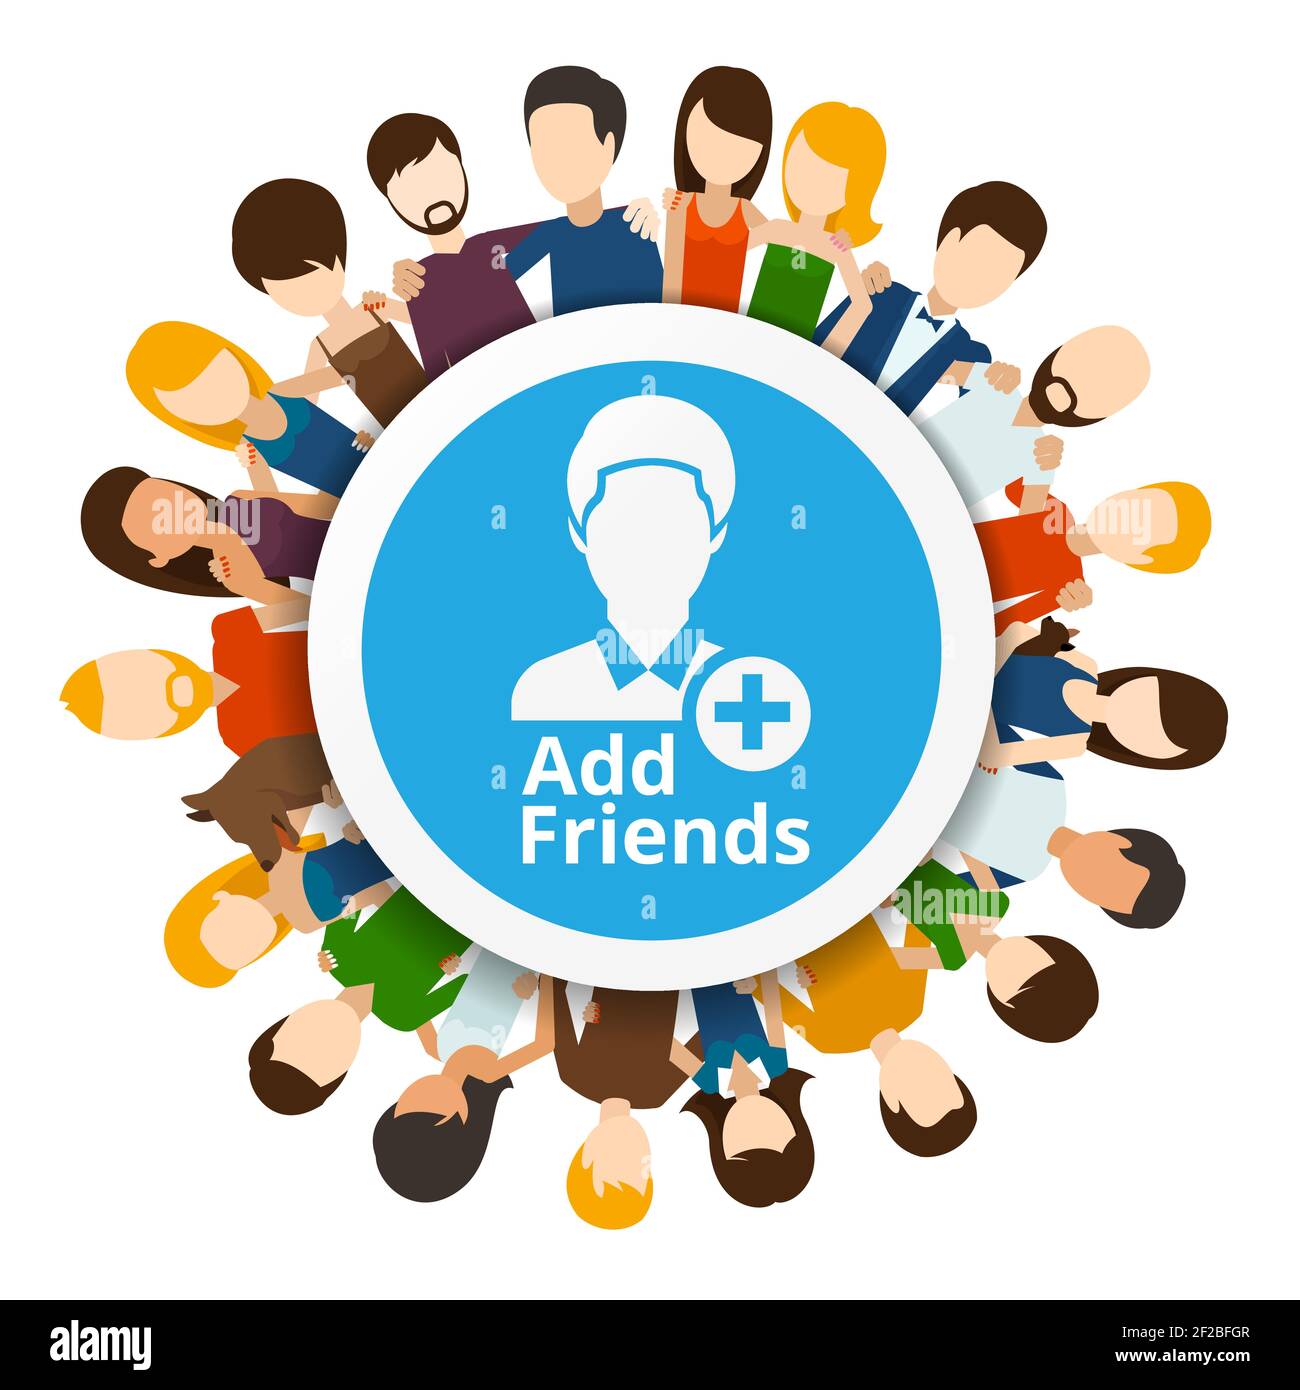 Add friends to social network. Community internet, web friendship, vector illustration Stock Vector